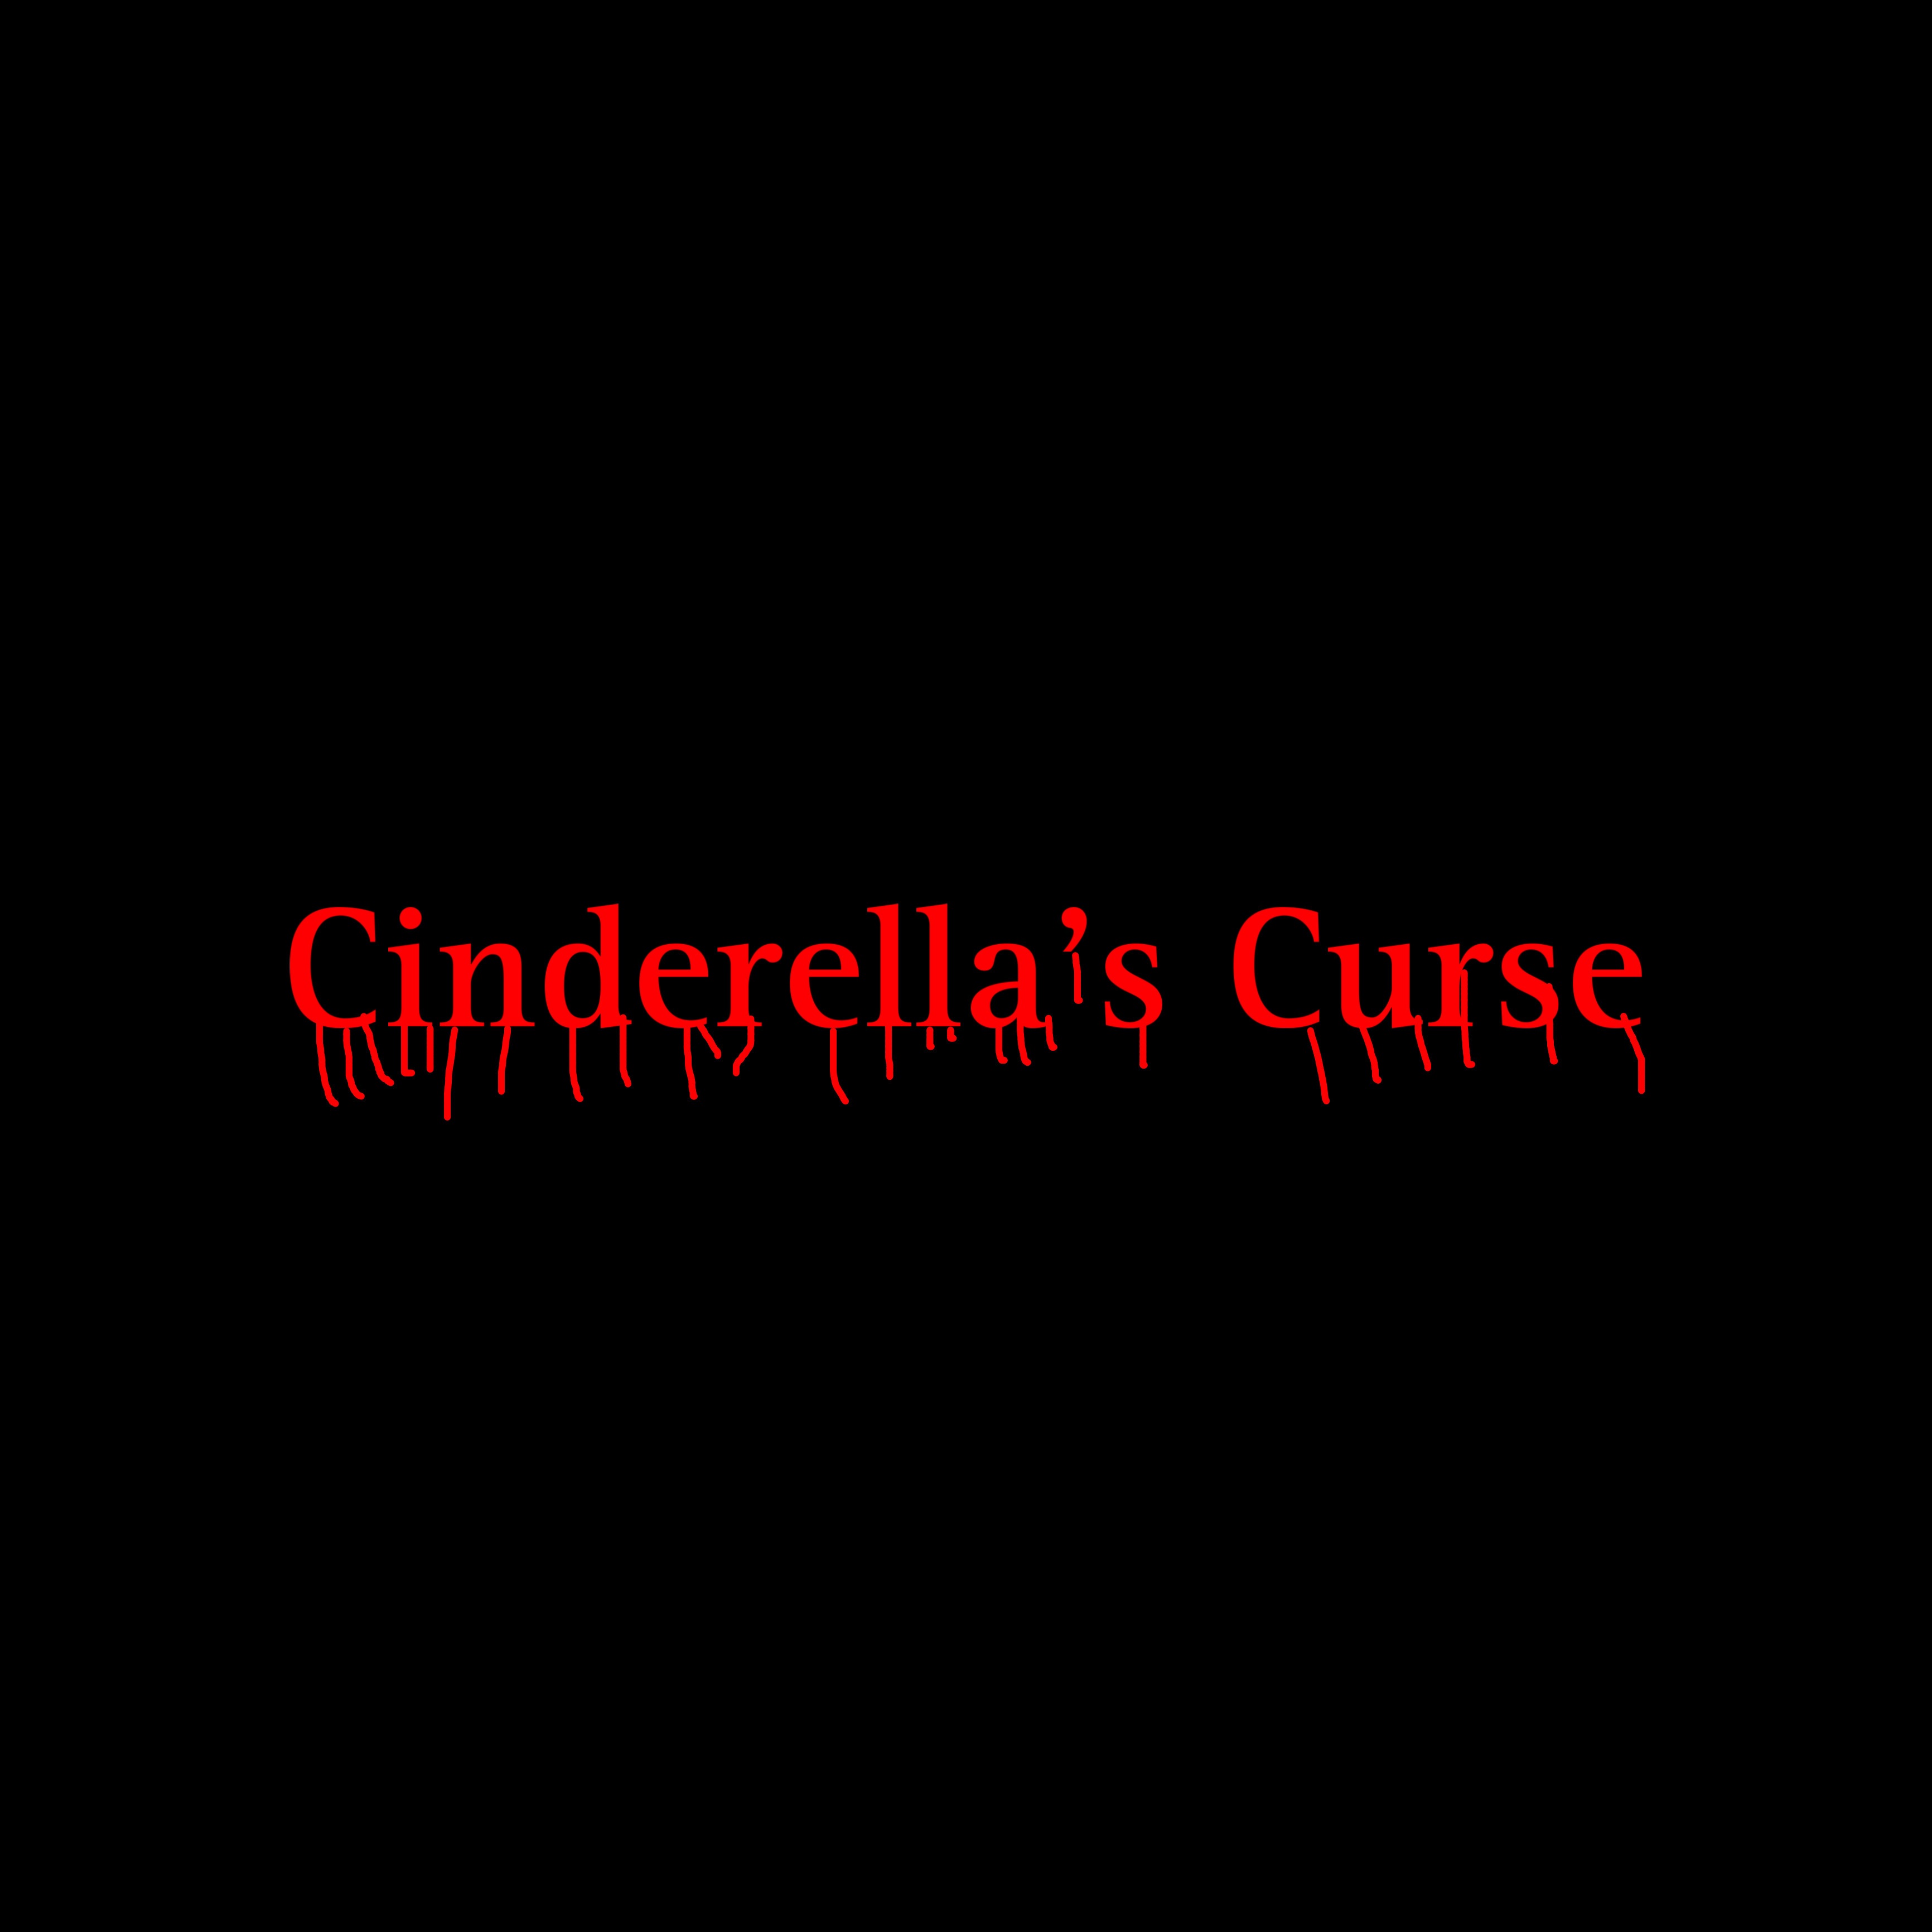 Cinderella's Curse, Hadirkan Cerita Dongeng Versi Gore